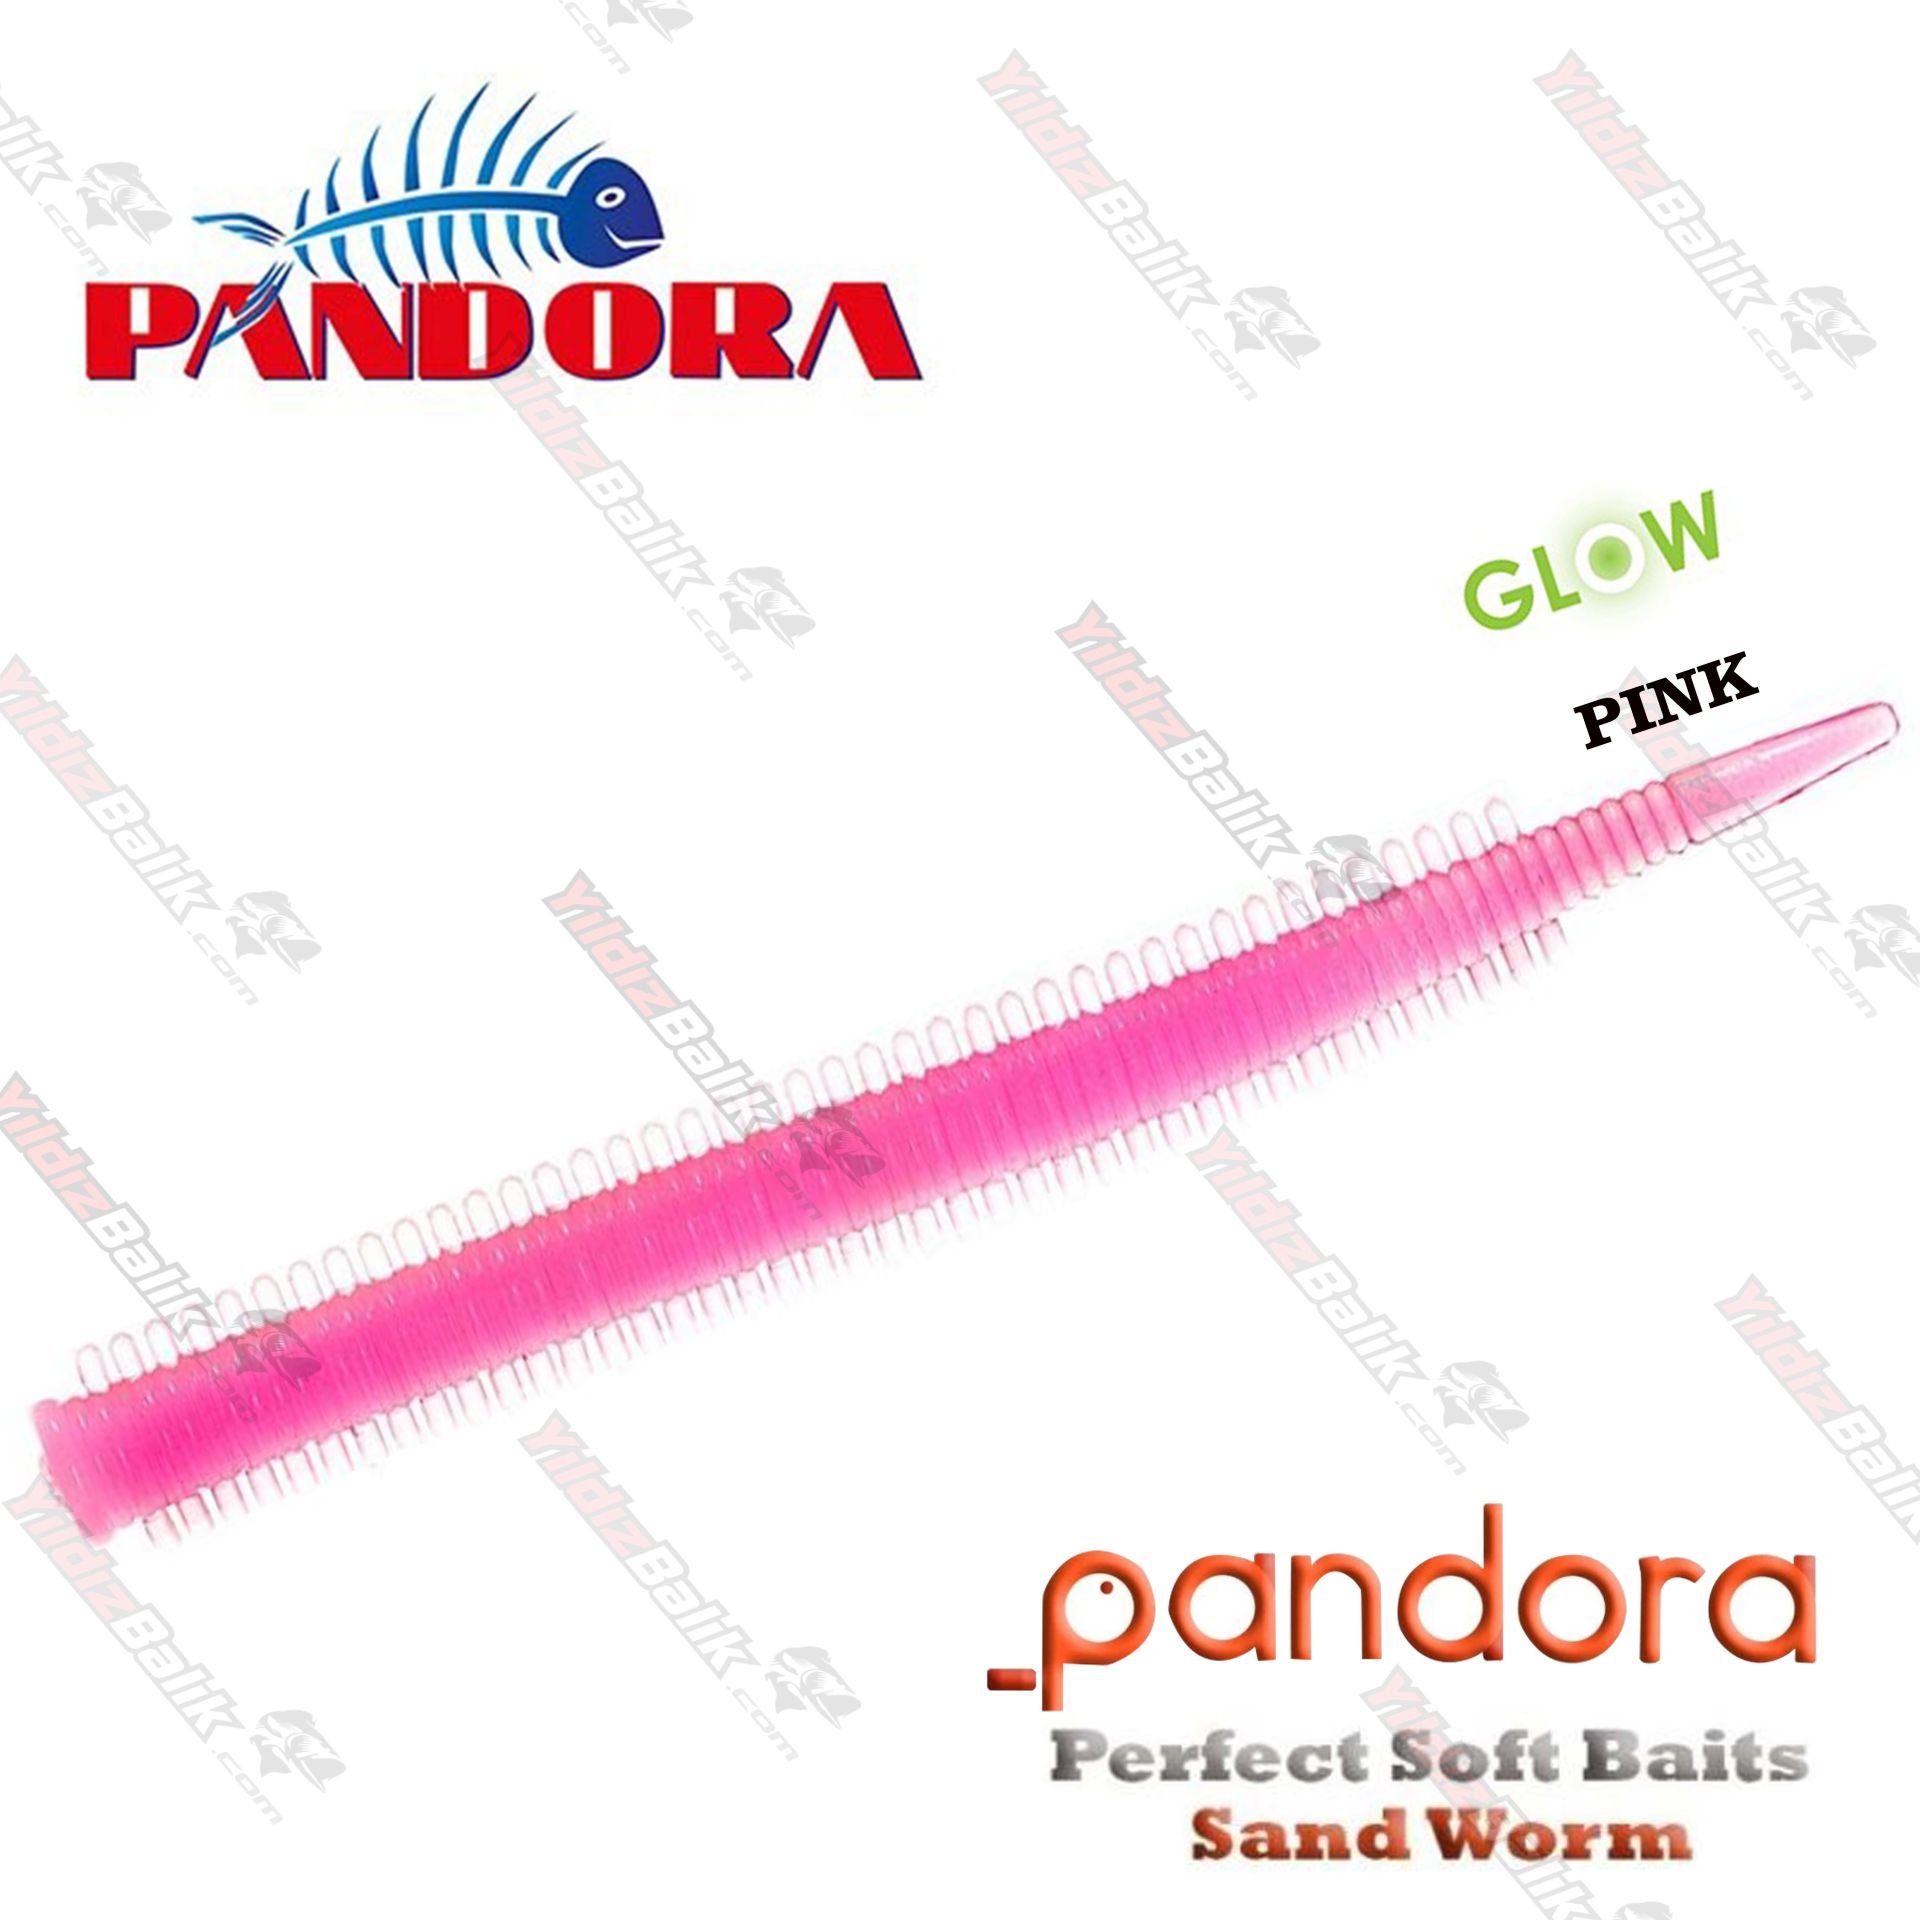 Pandora Perfect Soft Baits Sandworm 7 cm PINK Pandora Silikon yemler ( LRF )